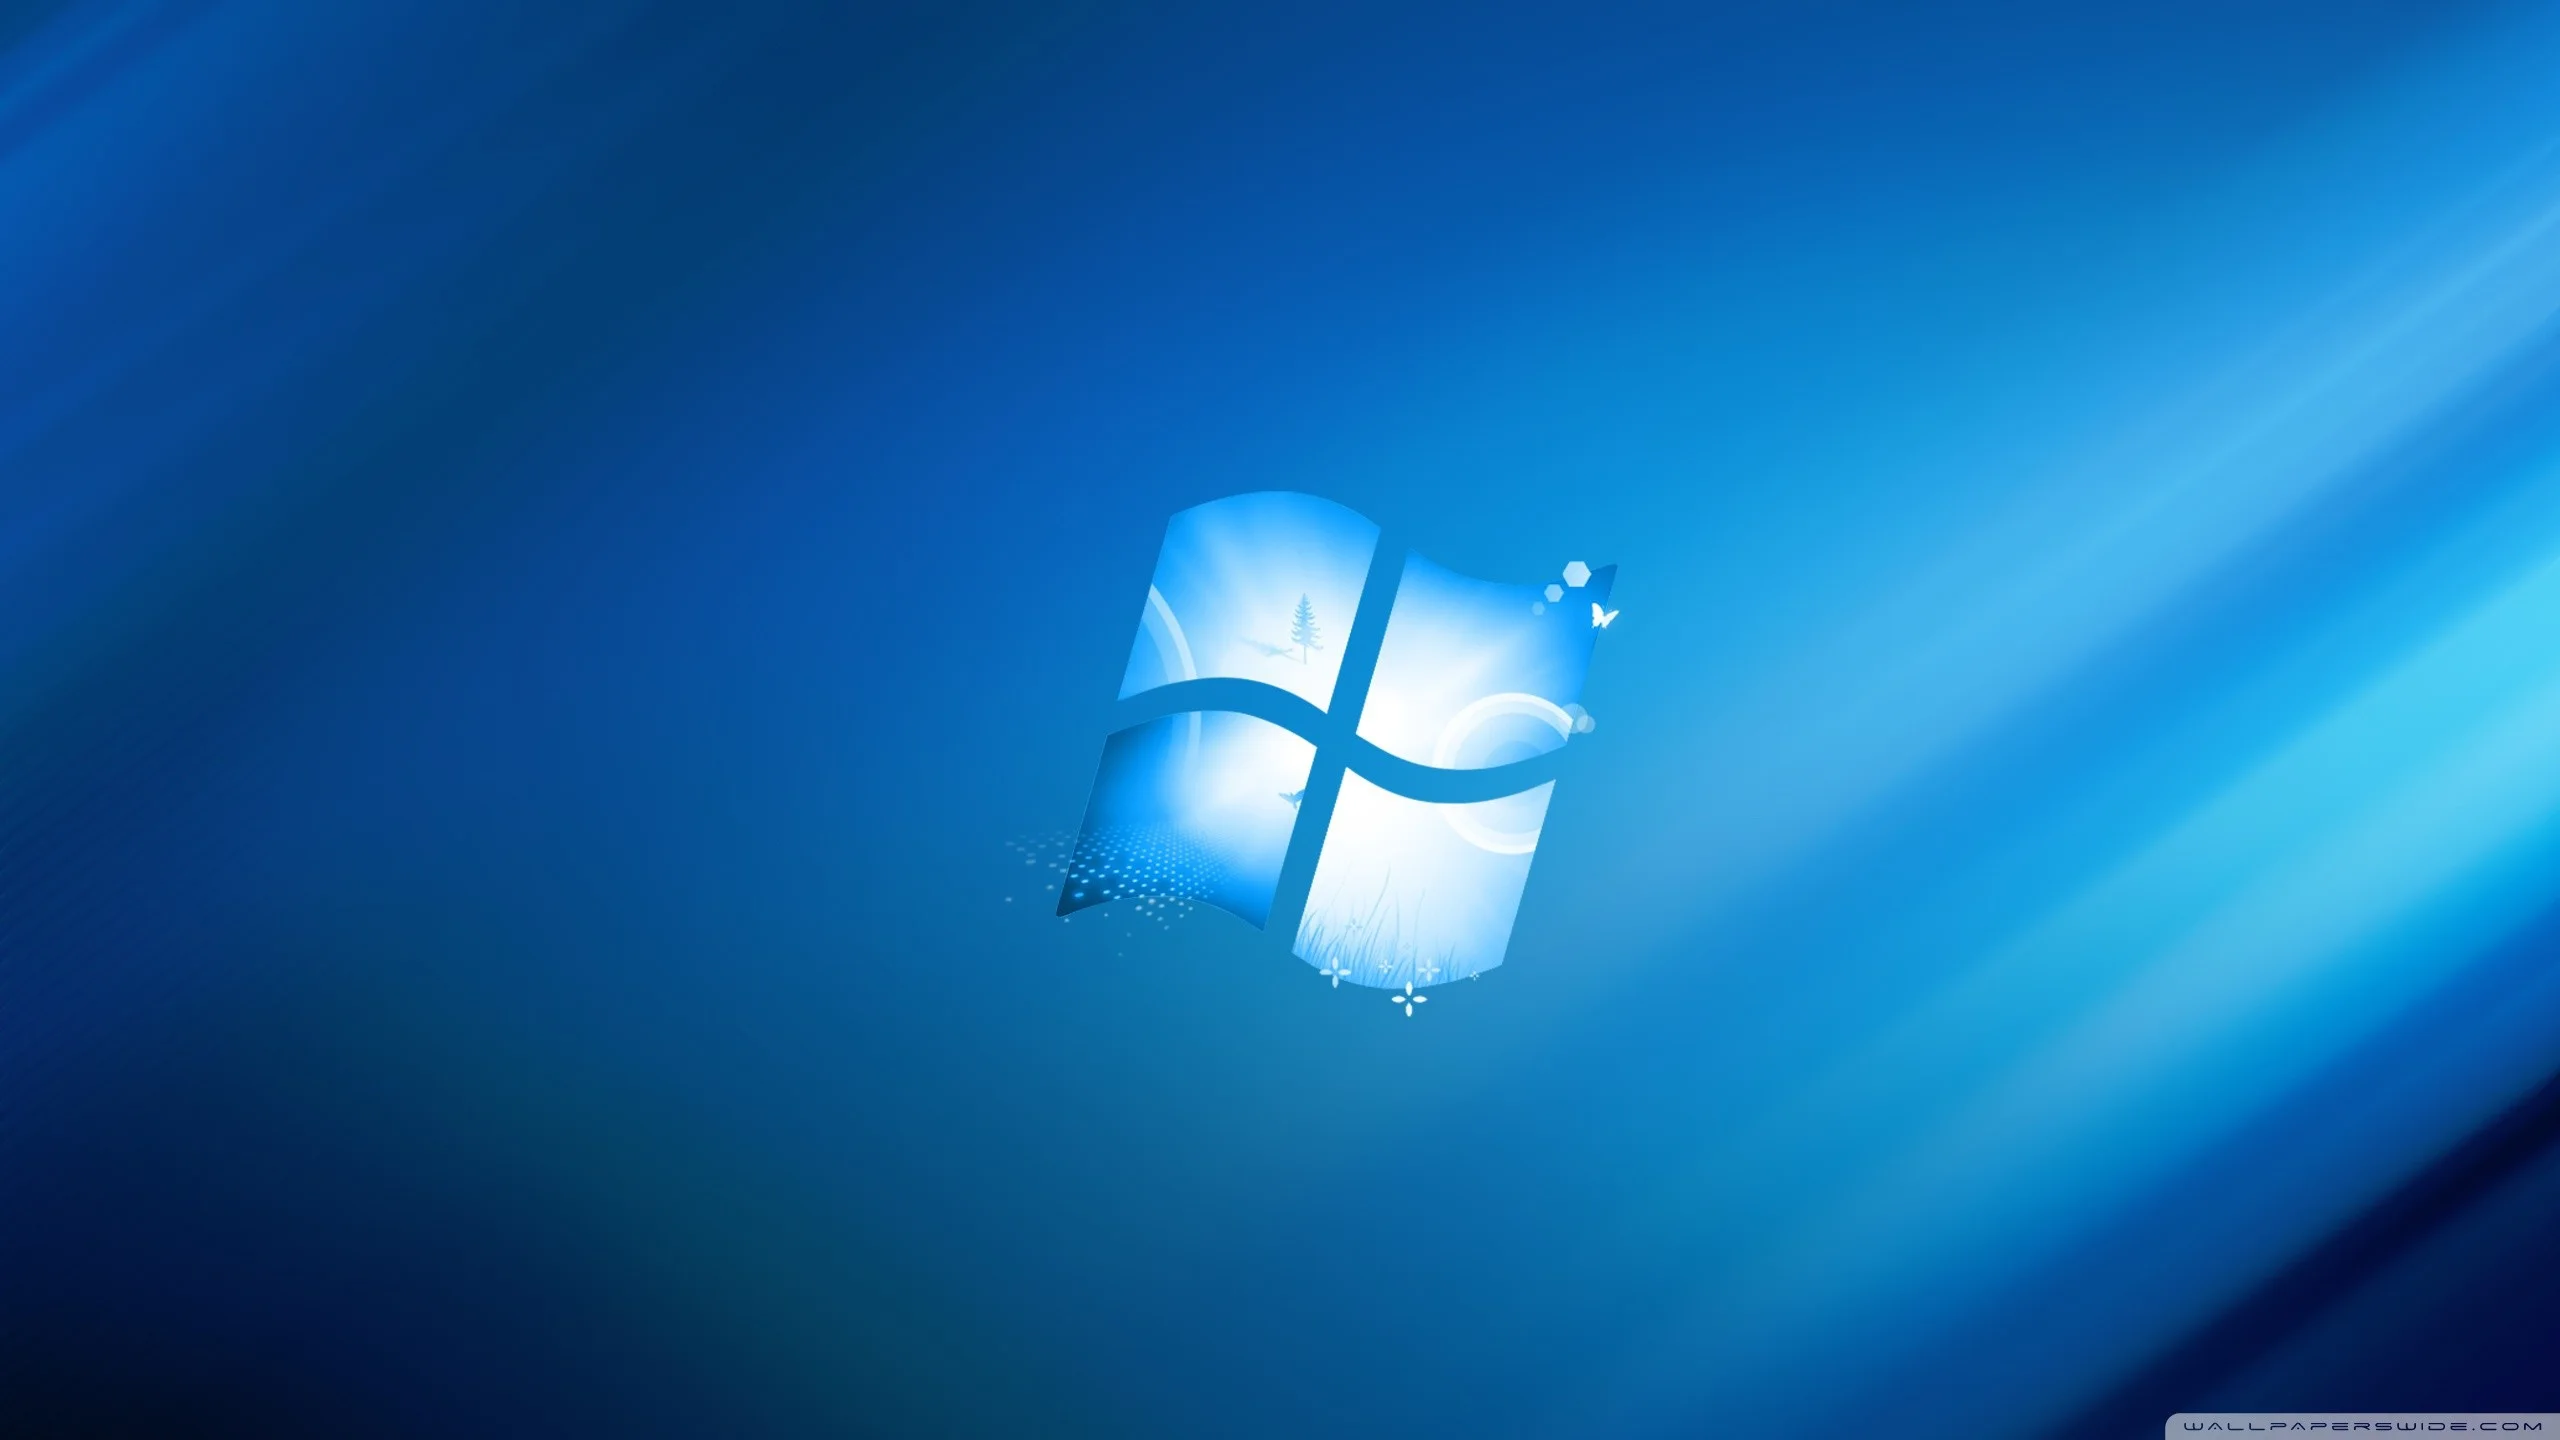 Microsoft Wallpaper Themes Windows 8